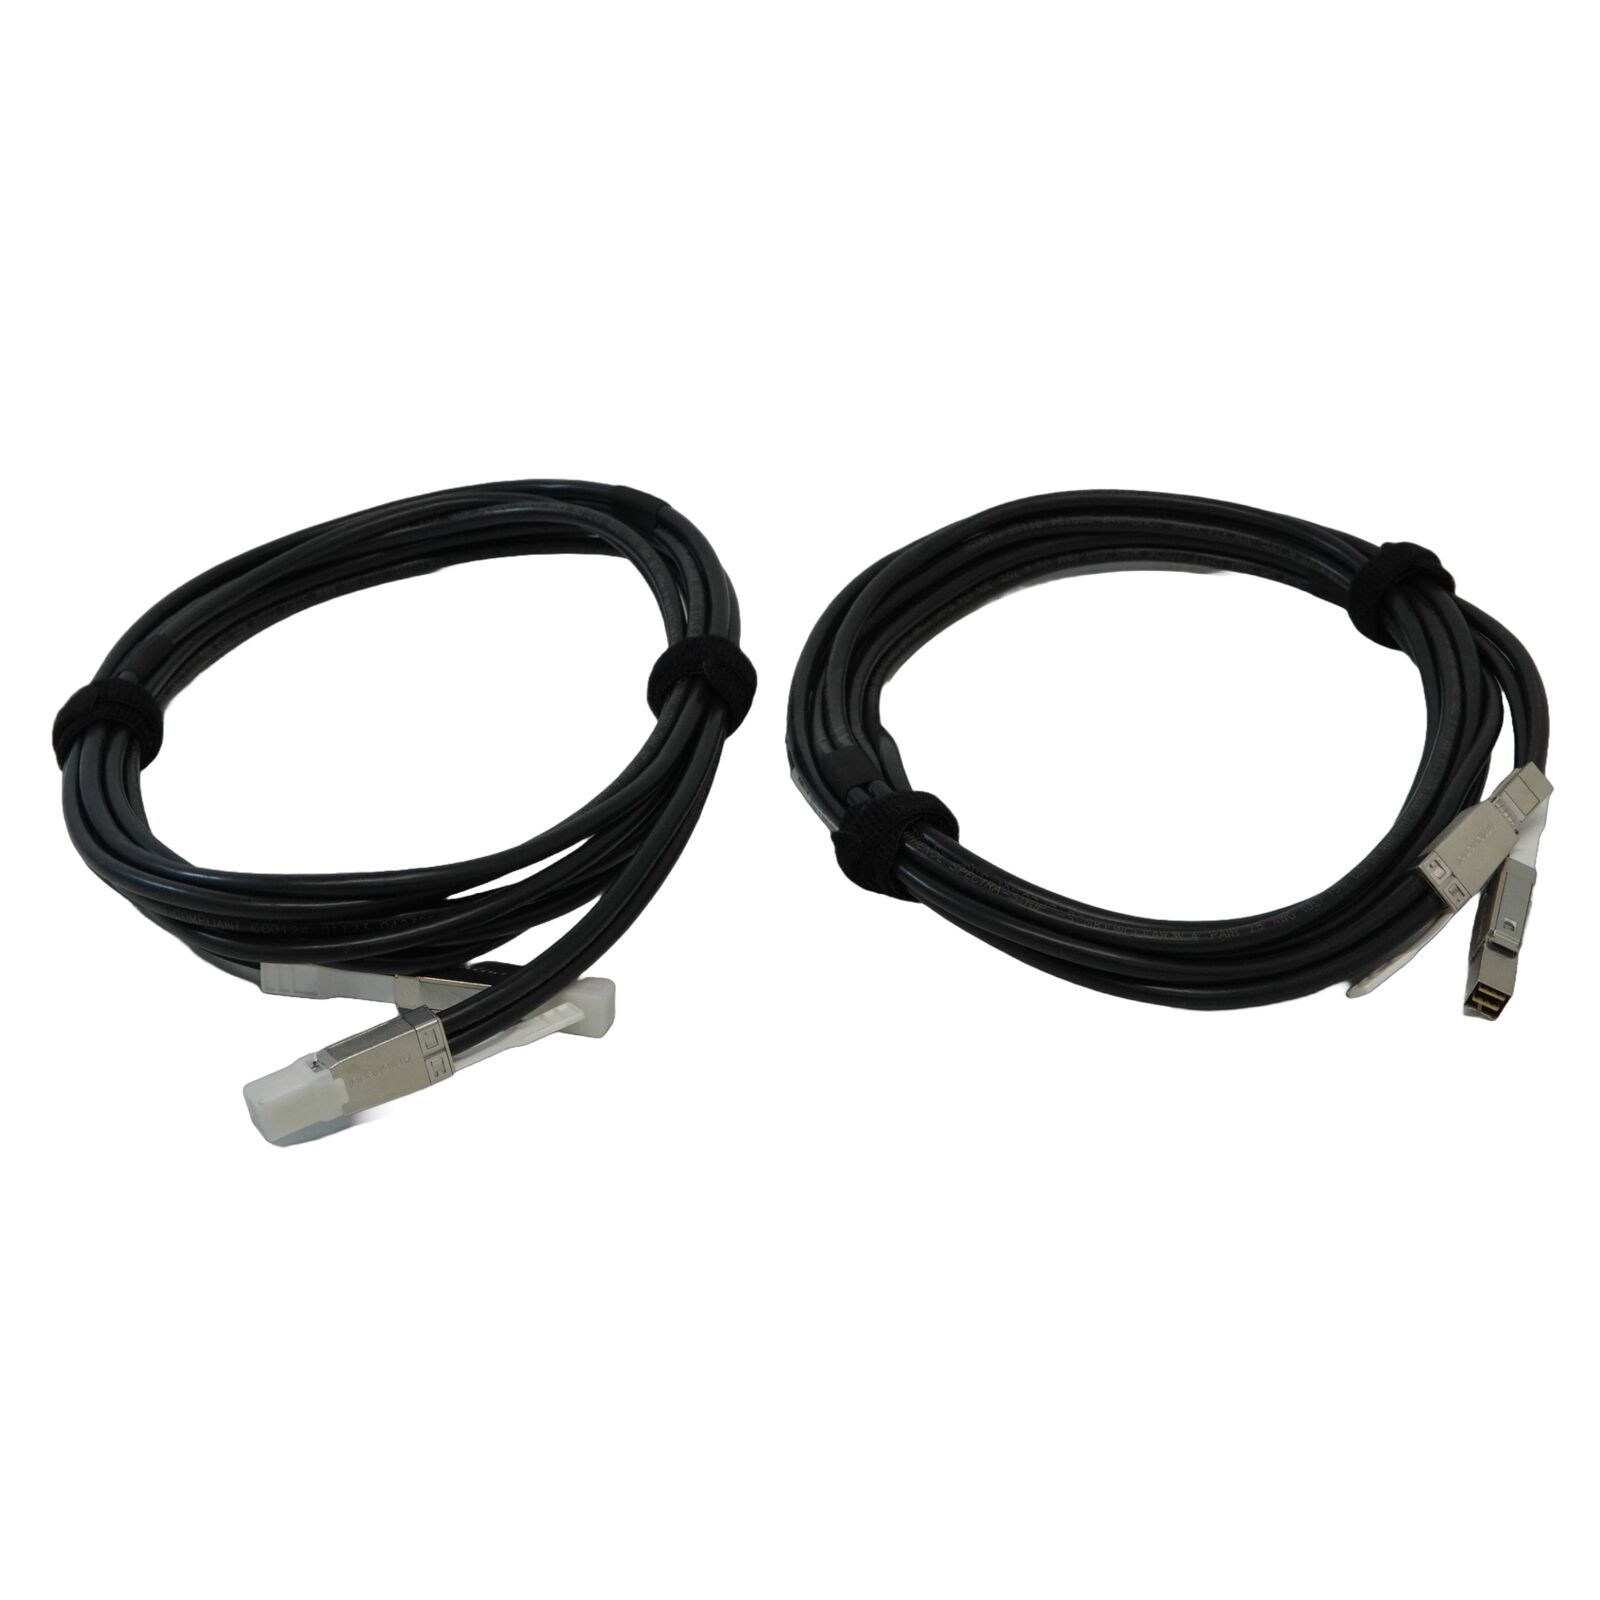 EMC Amphenol 038-000-208-00 3M SAS Cable